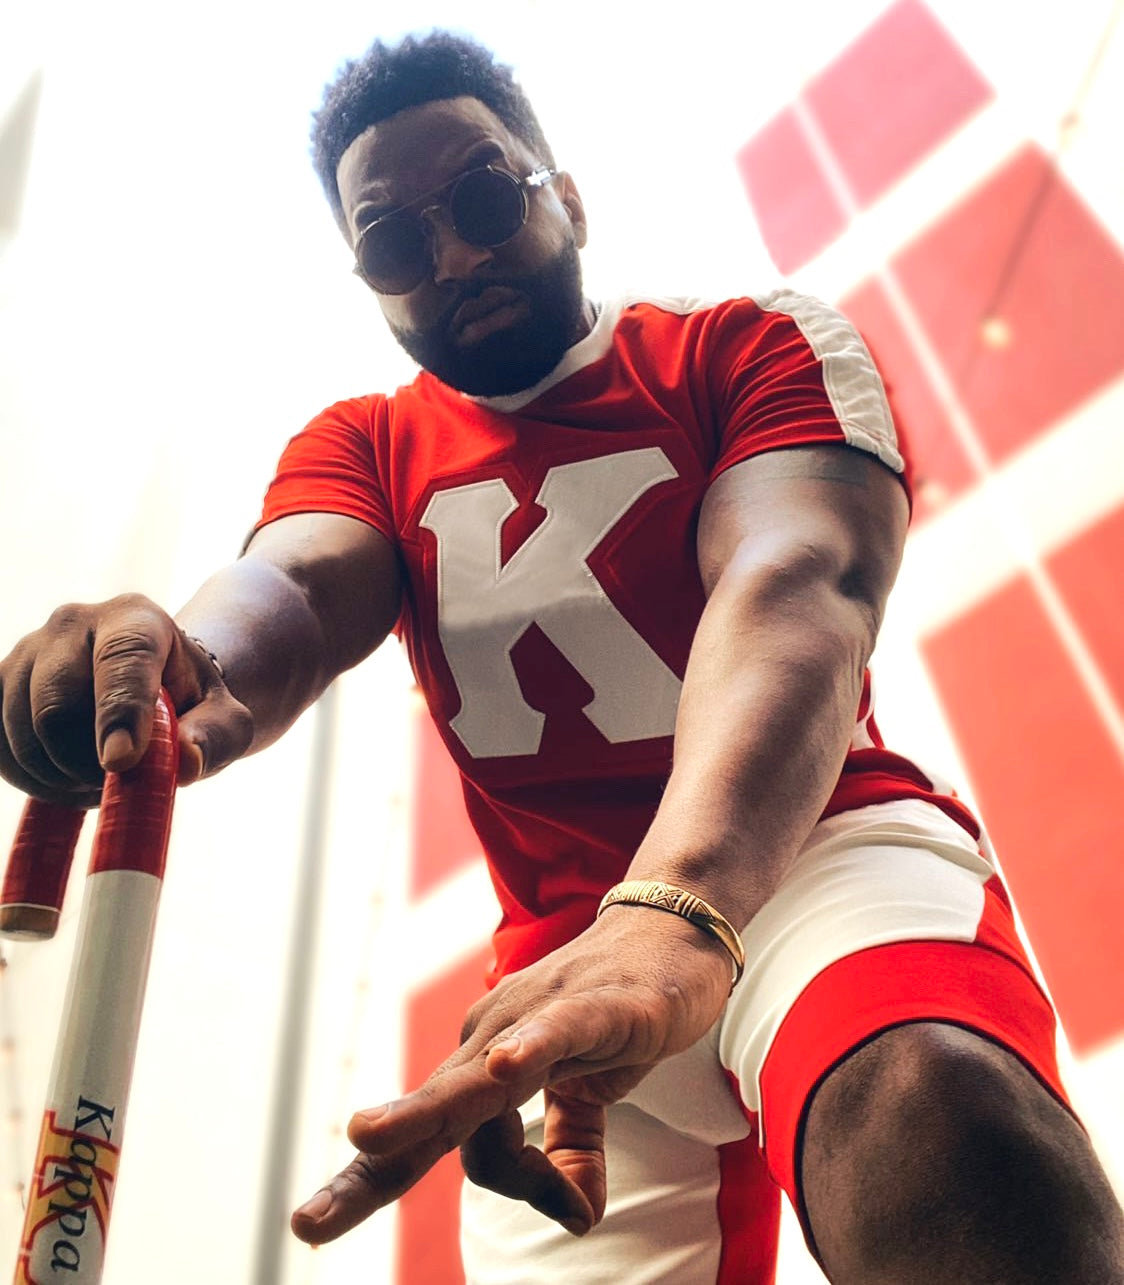 Kappa “K” Red Premium Shirt